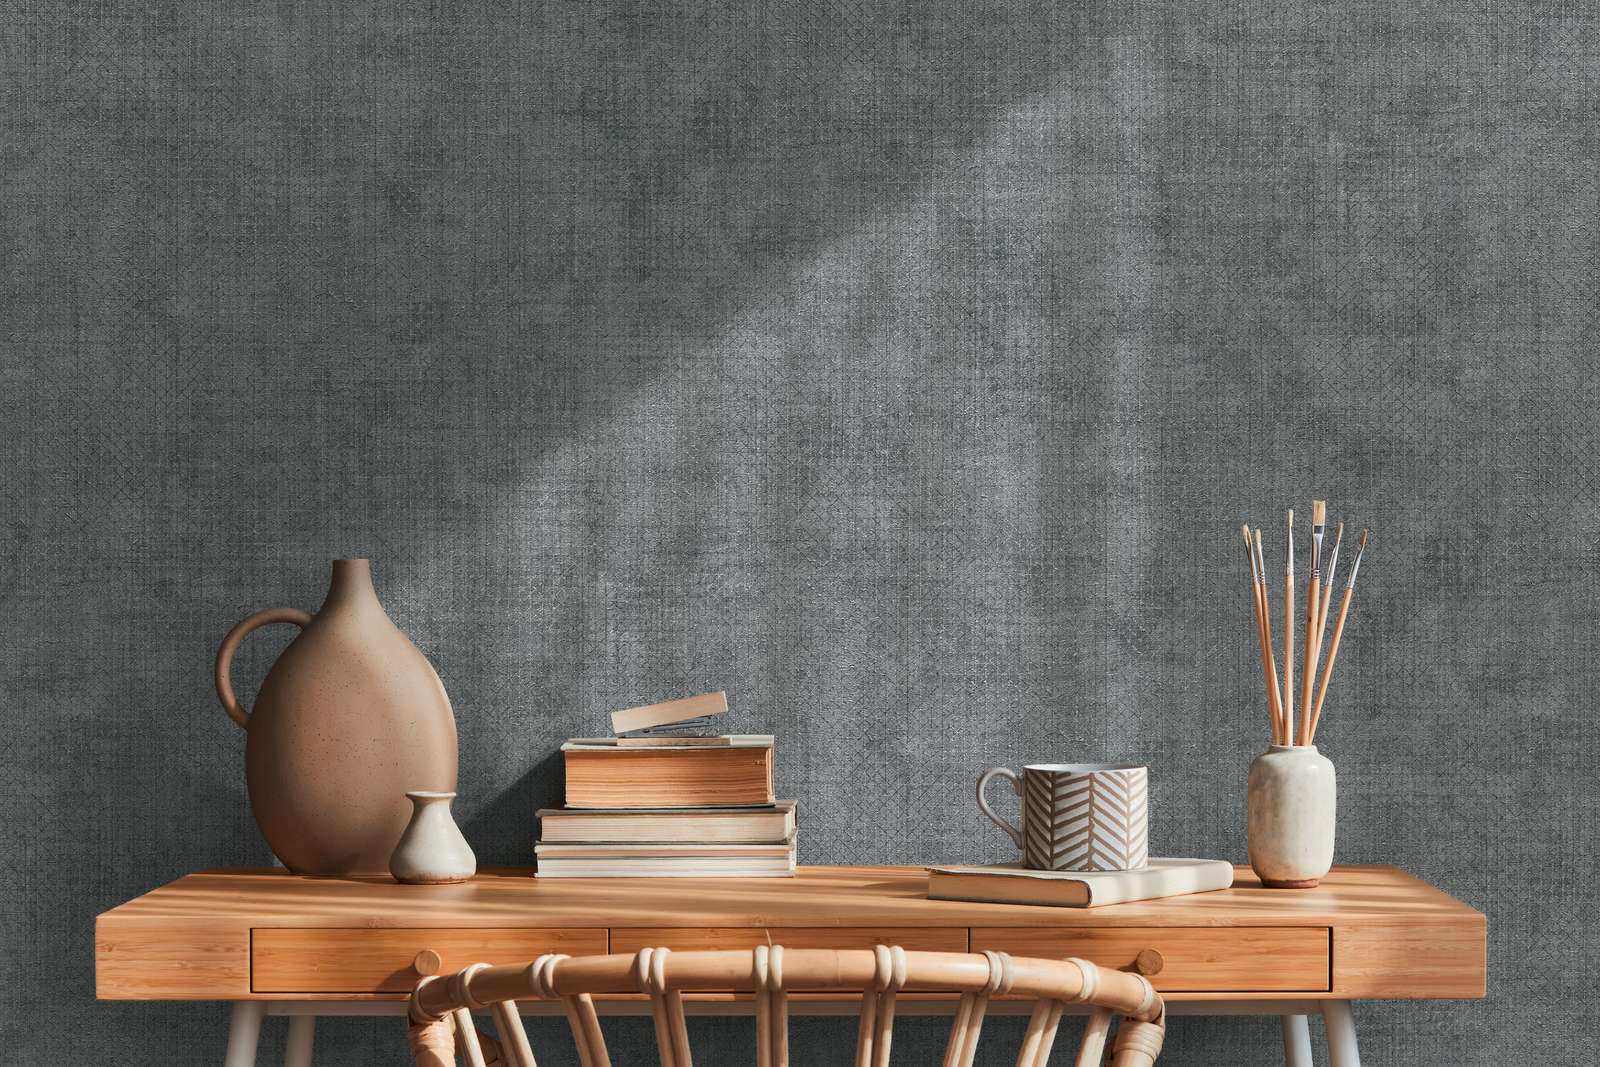             Dark grey mottled wallpaper with metallic line pattern
        